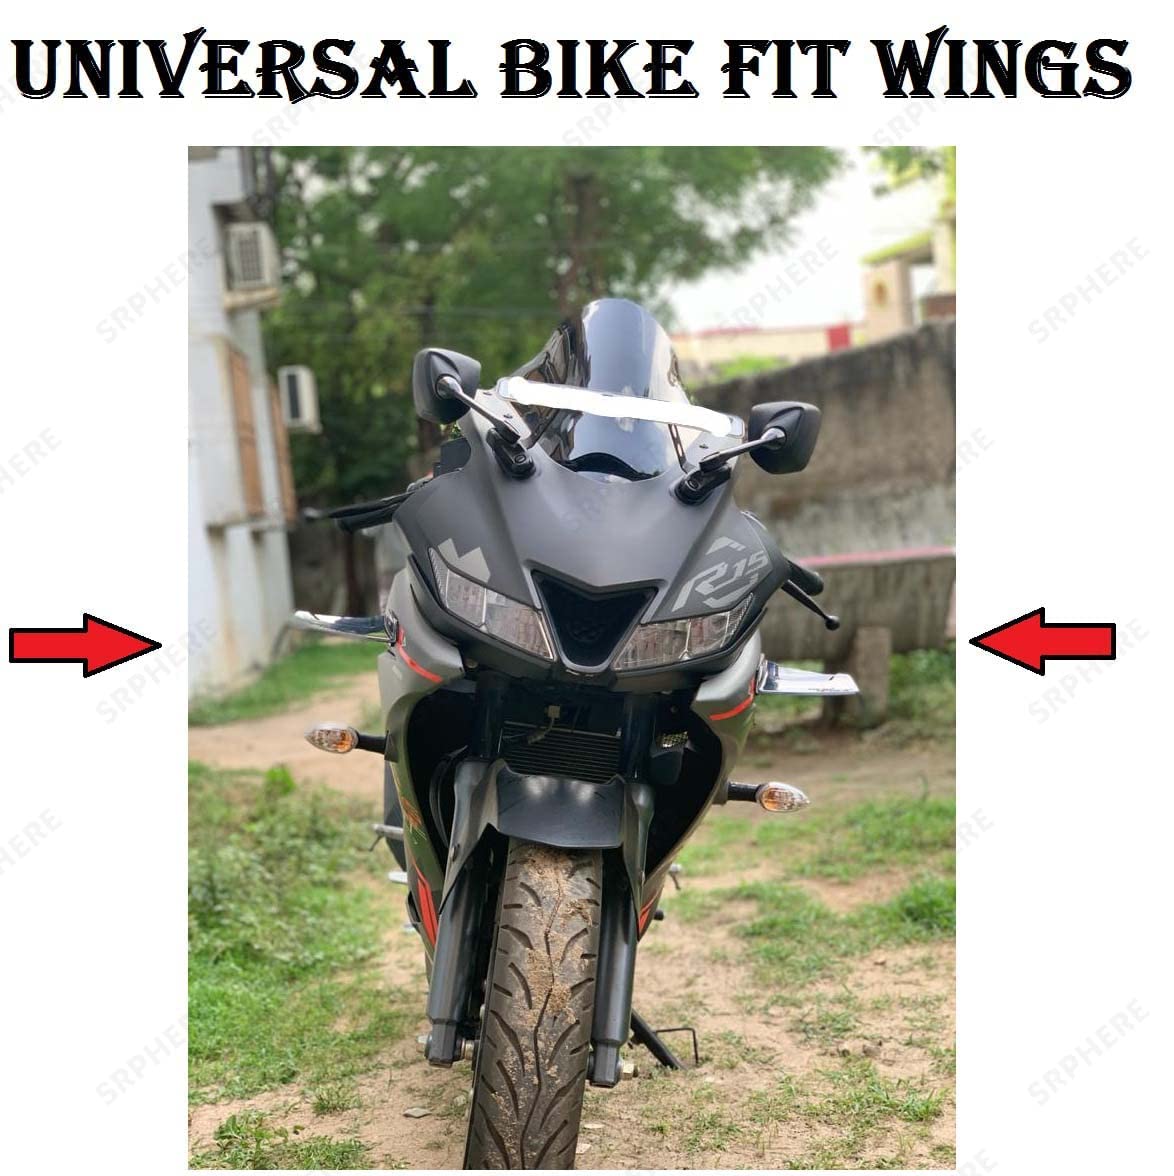 Universal Side Winglet Canard Wings for Bikes